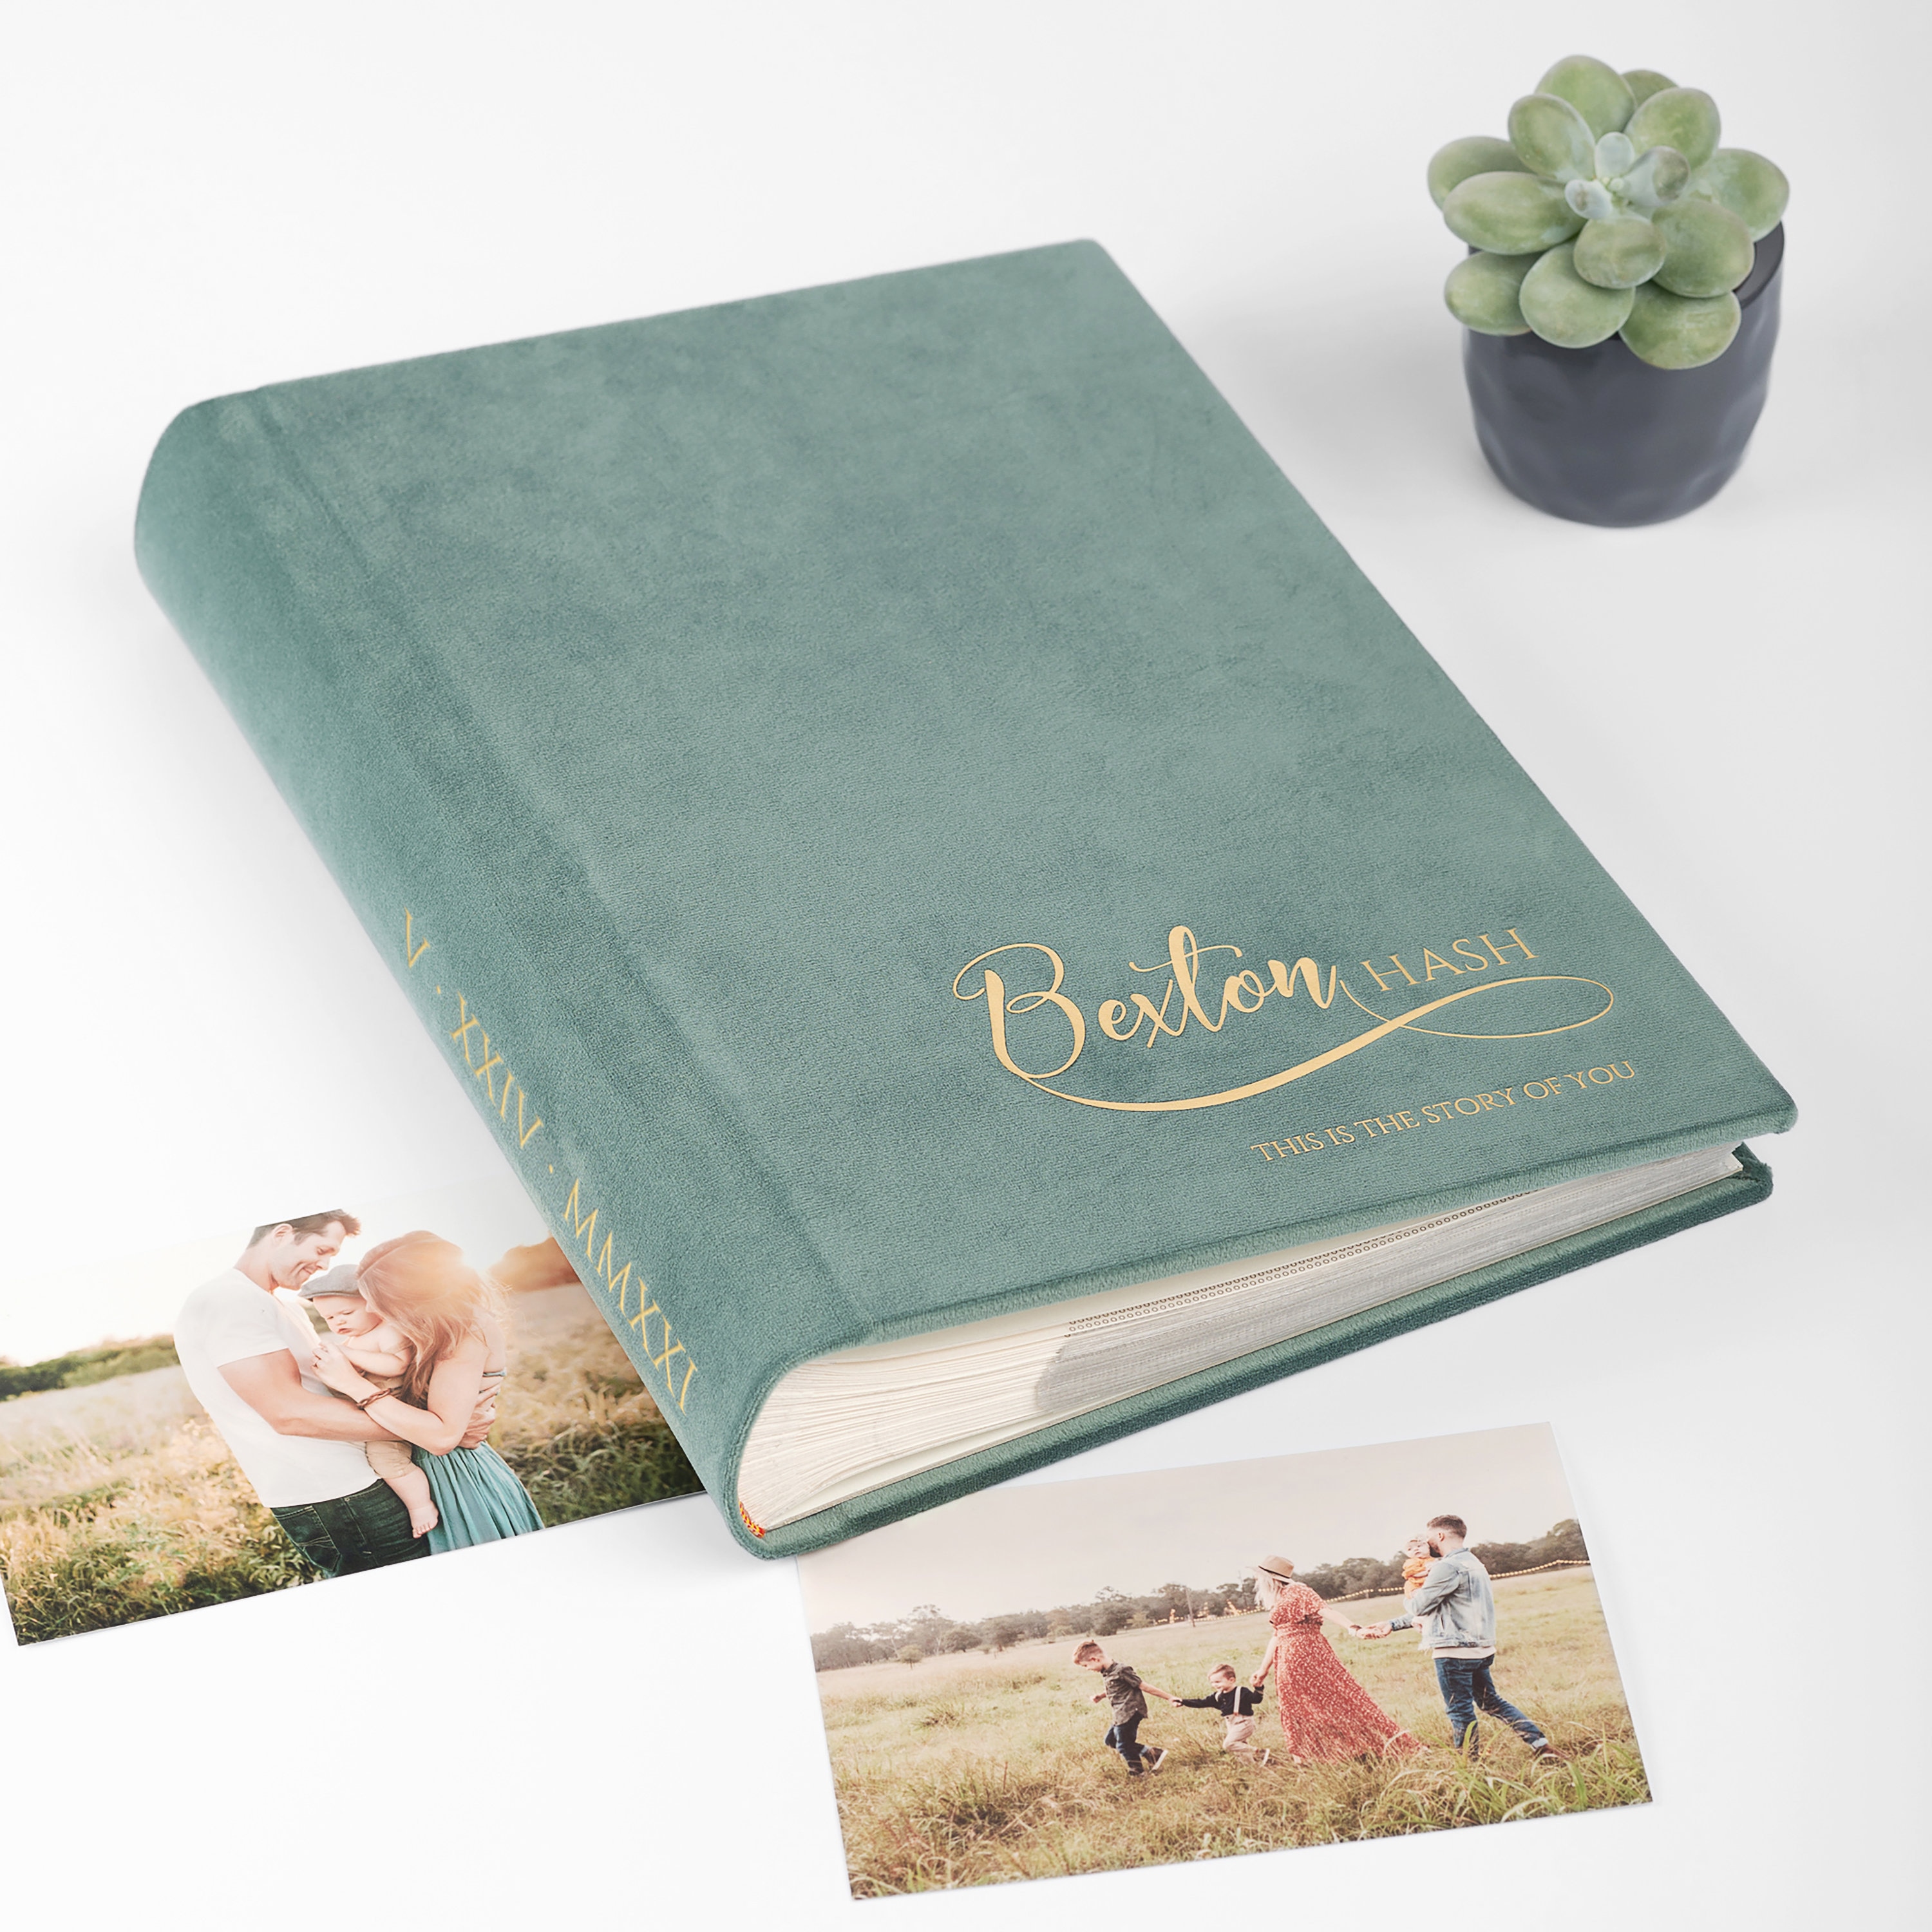  Arcoalbum Slip In Photo Album, Velvet Cover, for 300 4x6  Photos, Handmade Album with Sleeves for 300 10x15 cm Photos : Handmade  Products